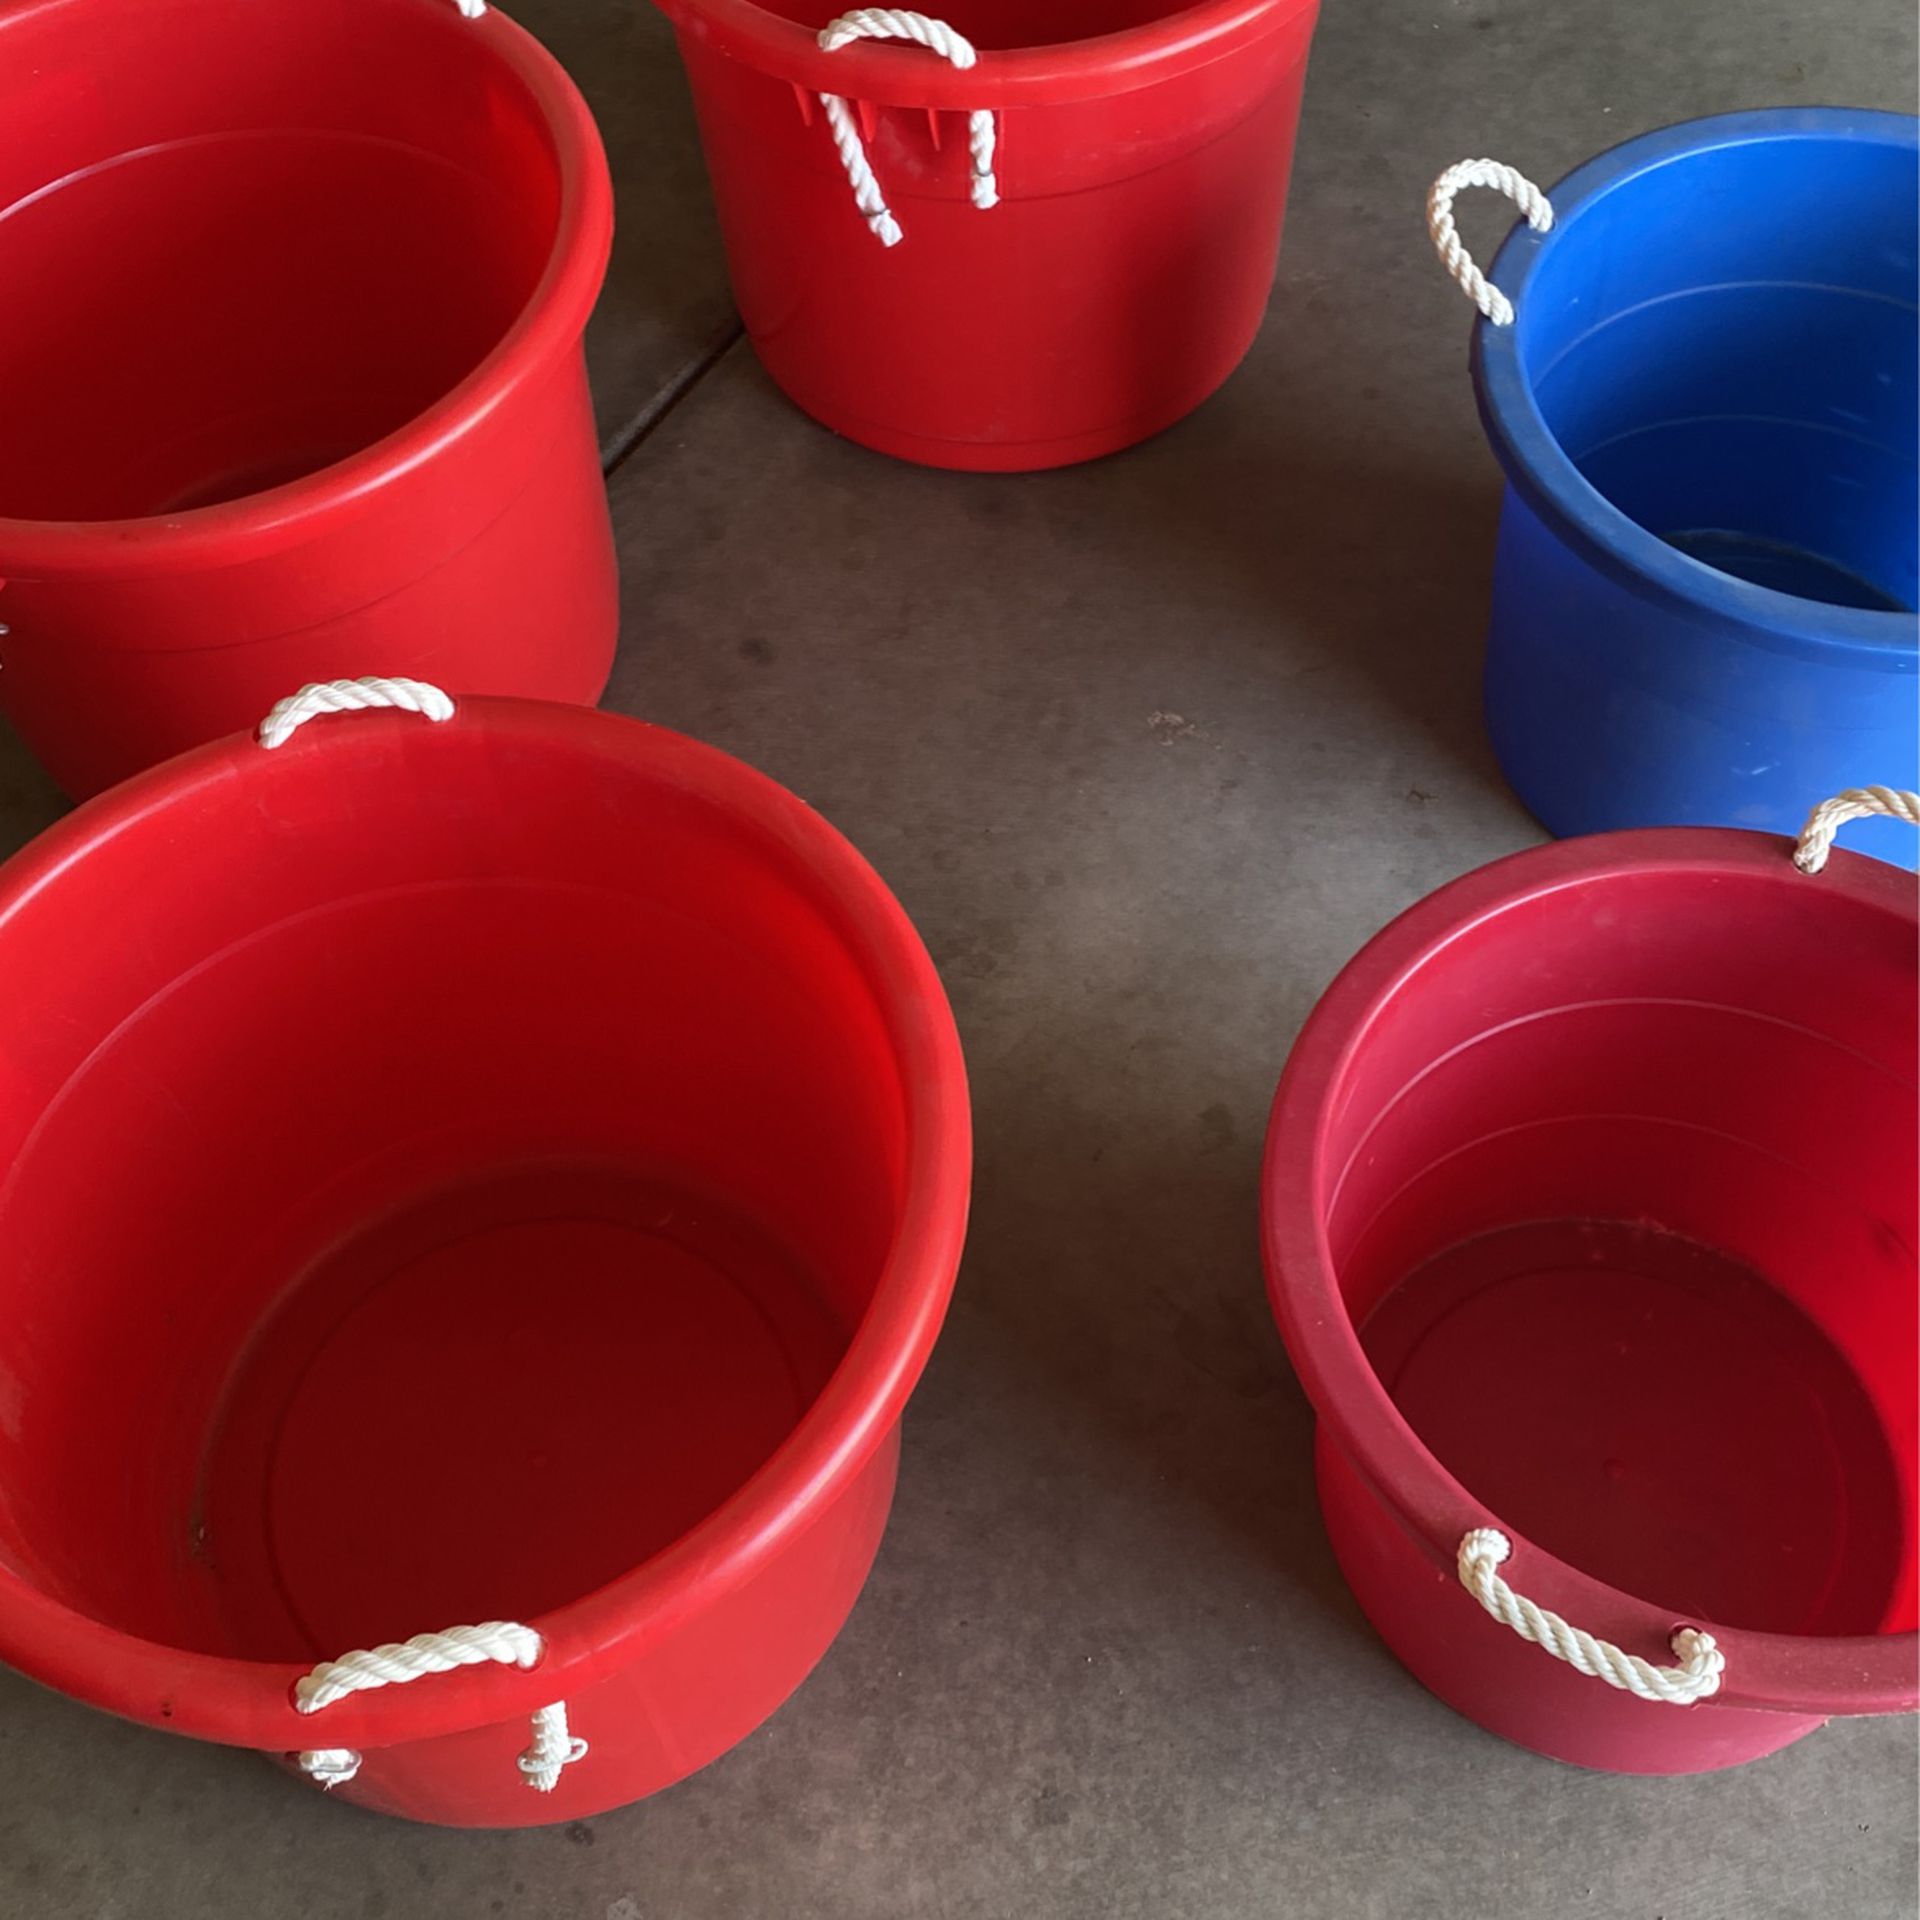 Husky holler 19 gallon storage buckets for Sale in Escondido, CA